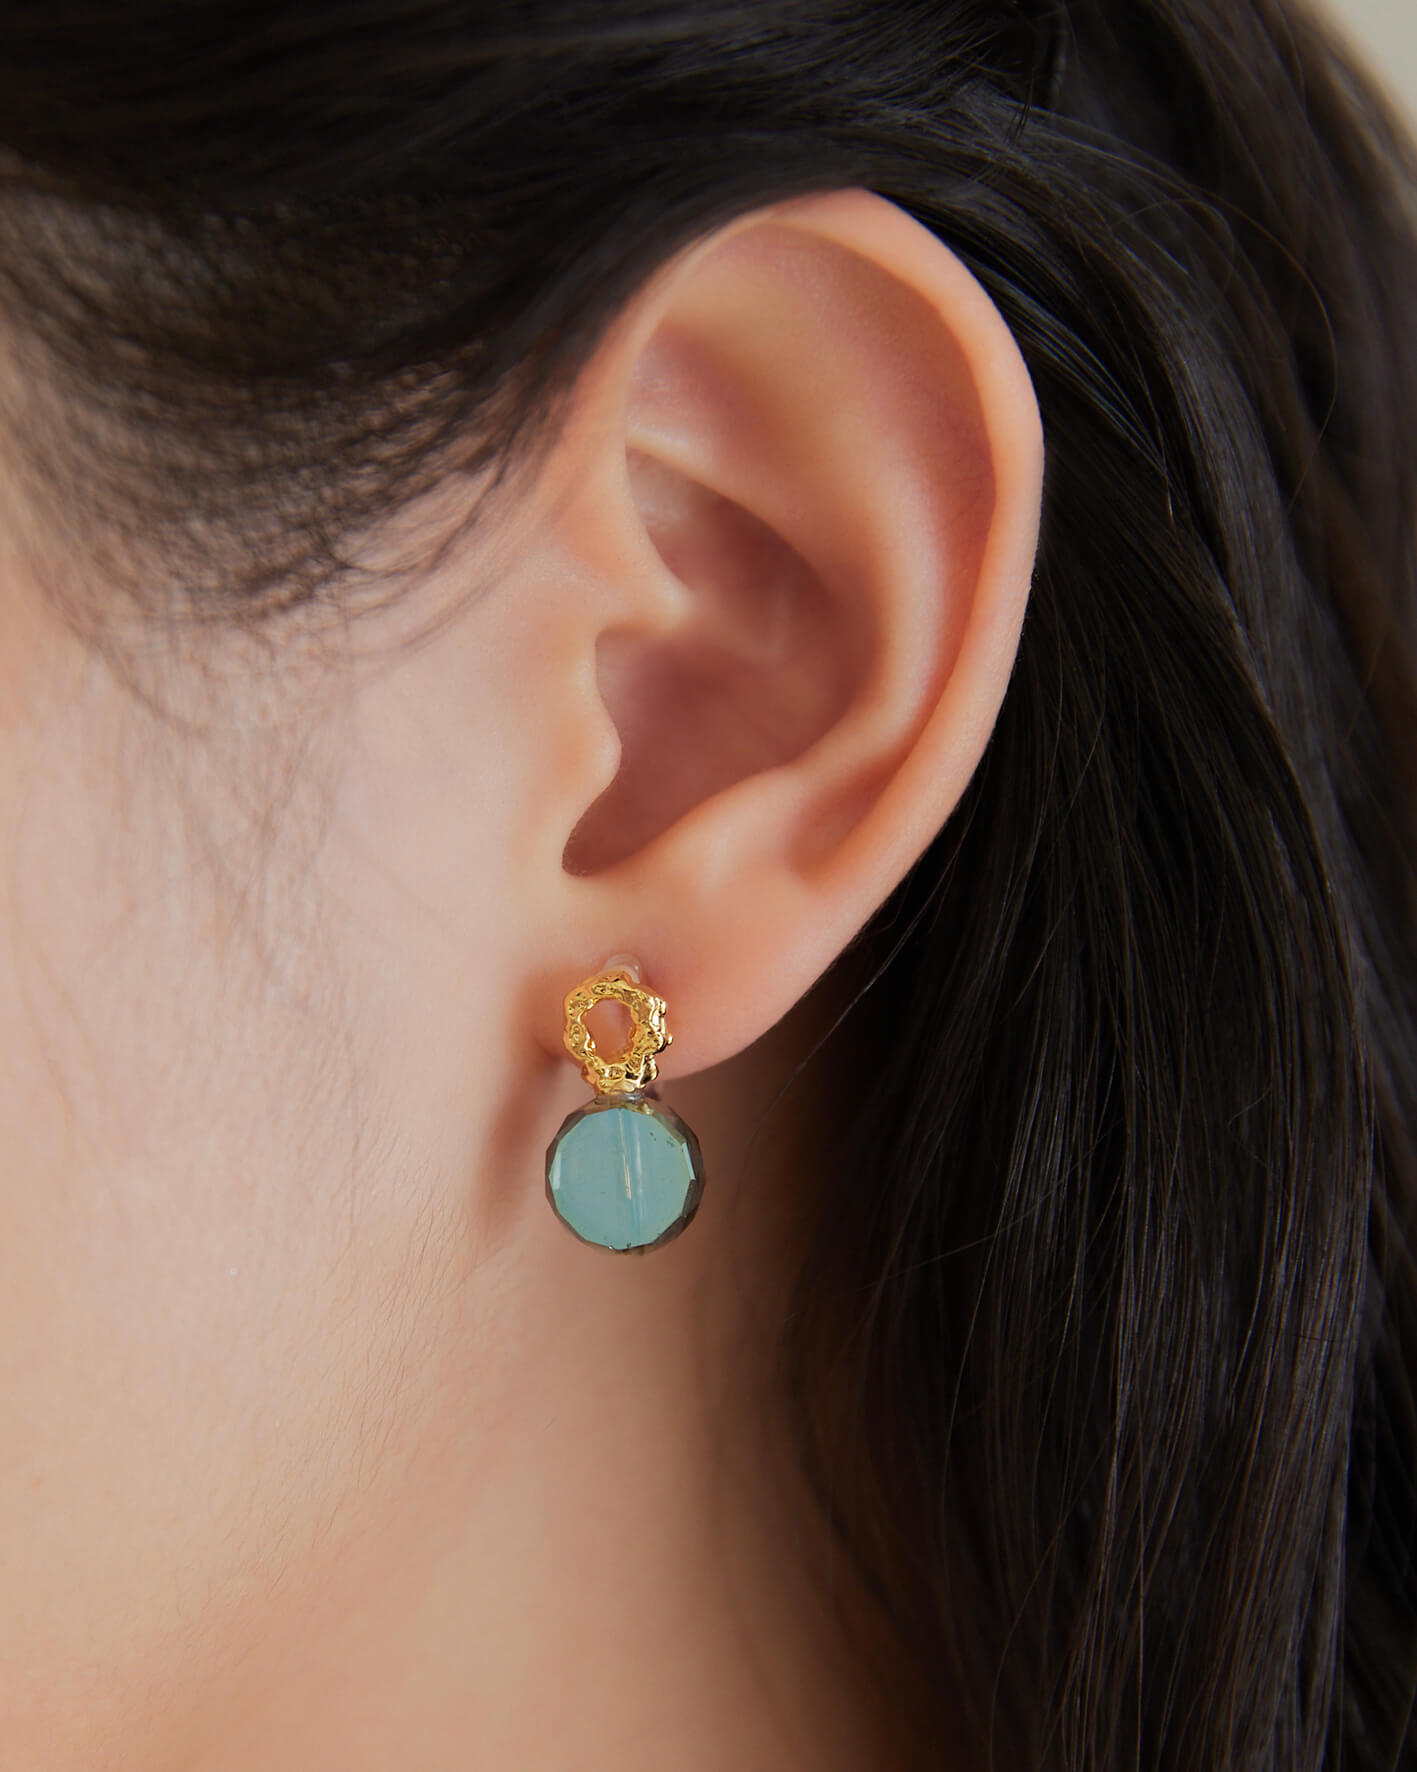 Eco安珂,韓國飾品,韓國耳環,耳針式耳環,矽膠夾耳環,透明耳夾耳環,無痛耳夾耳環,復古寶石耳環